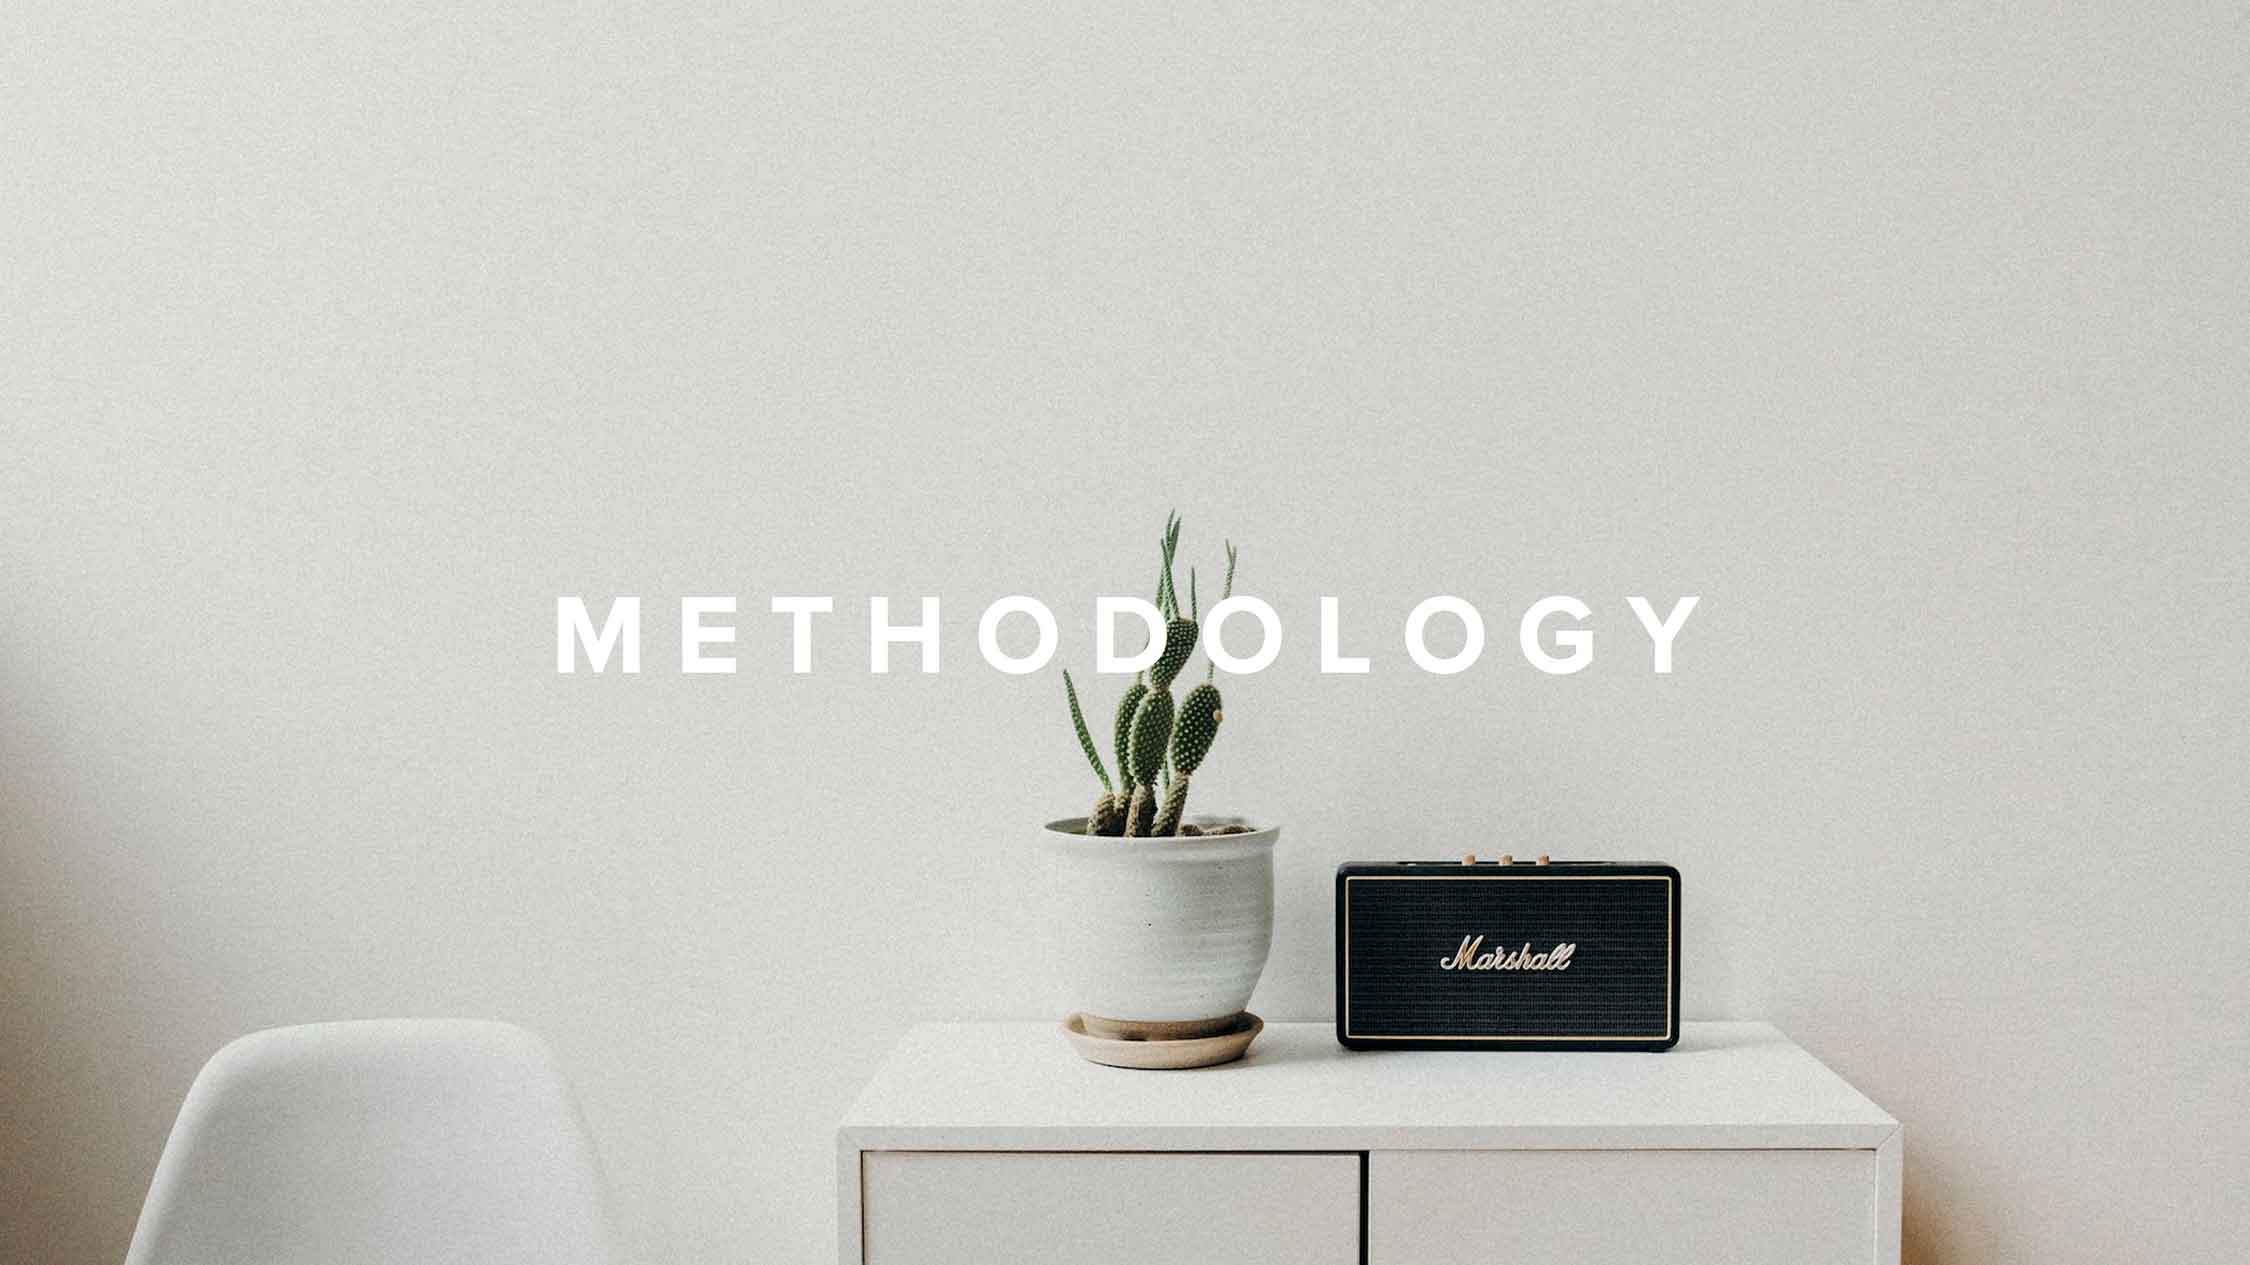 "Methodology" atop a Marshall smart speaker.